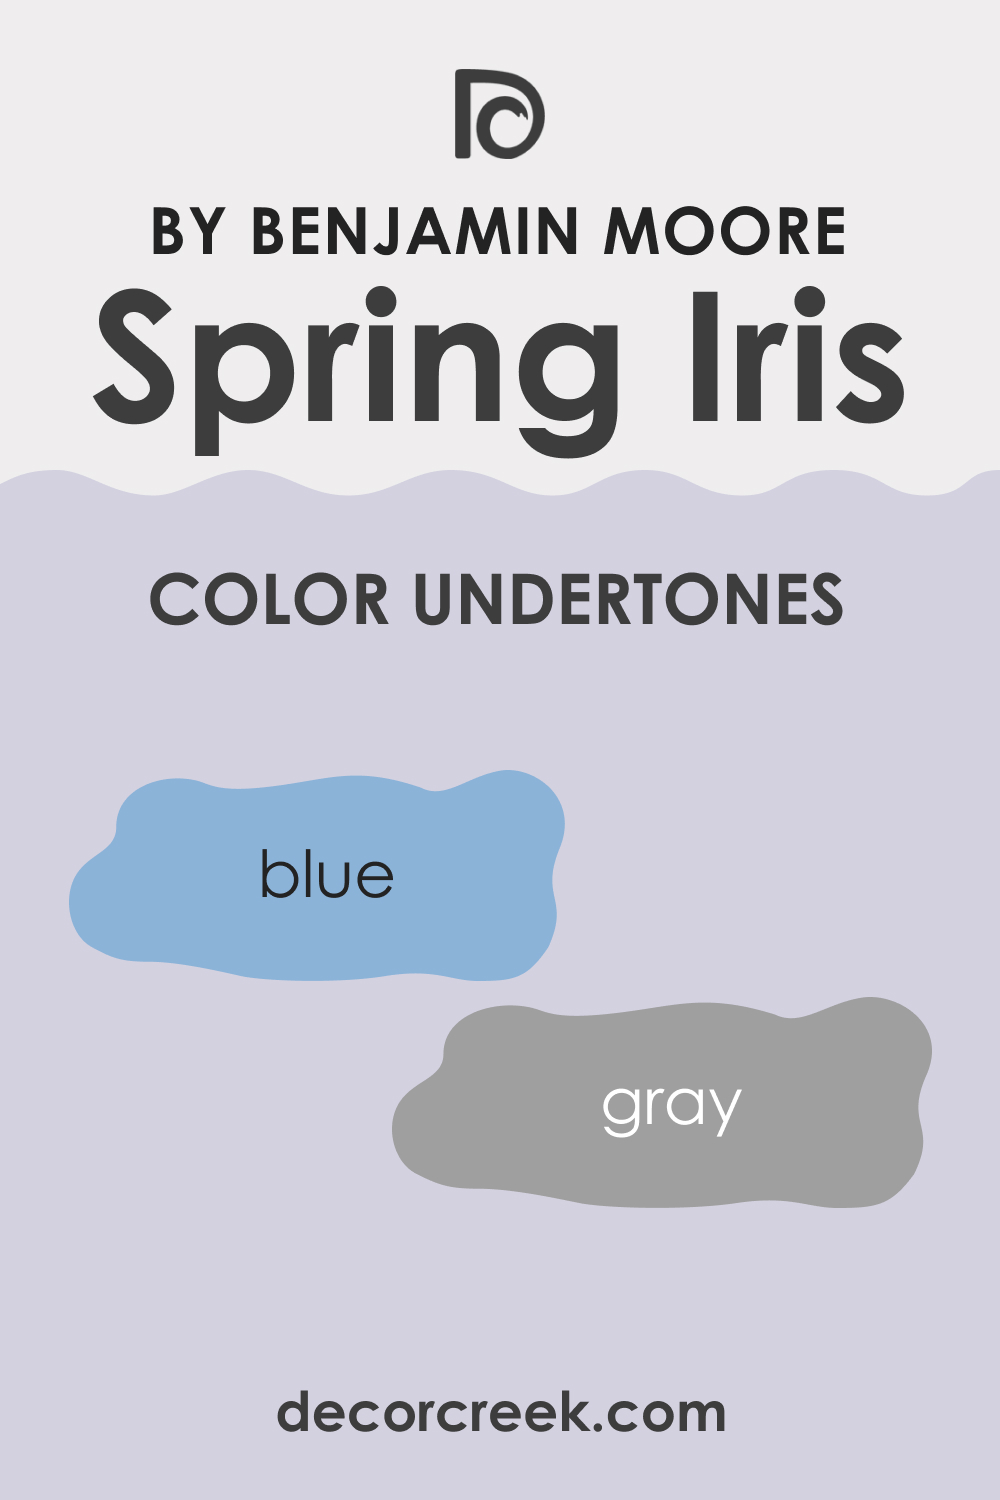 Undertones of Spring Iris 1402